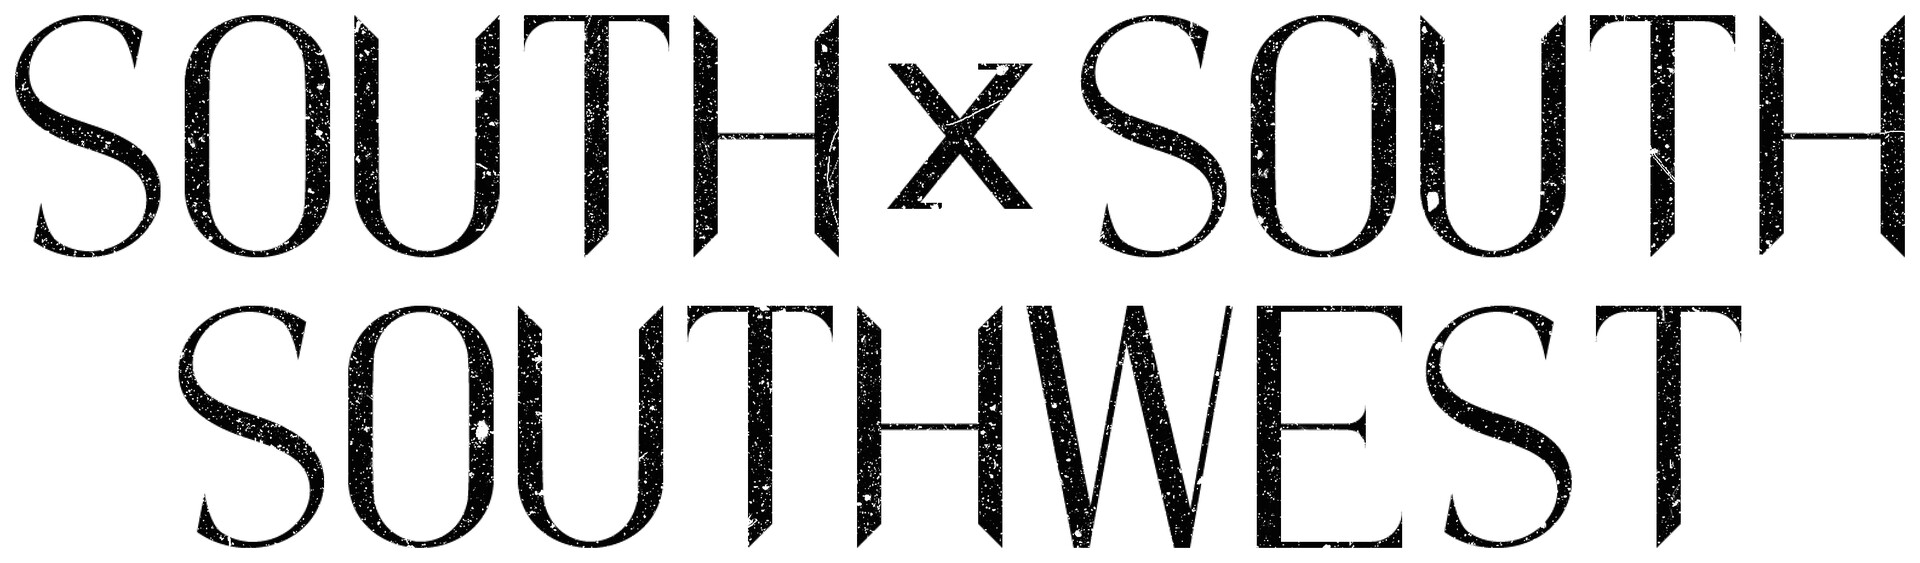 ArtStation South x South x Southwest Logos